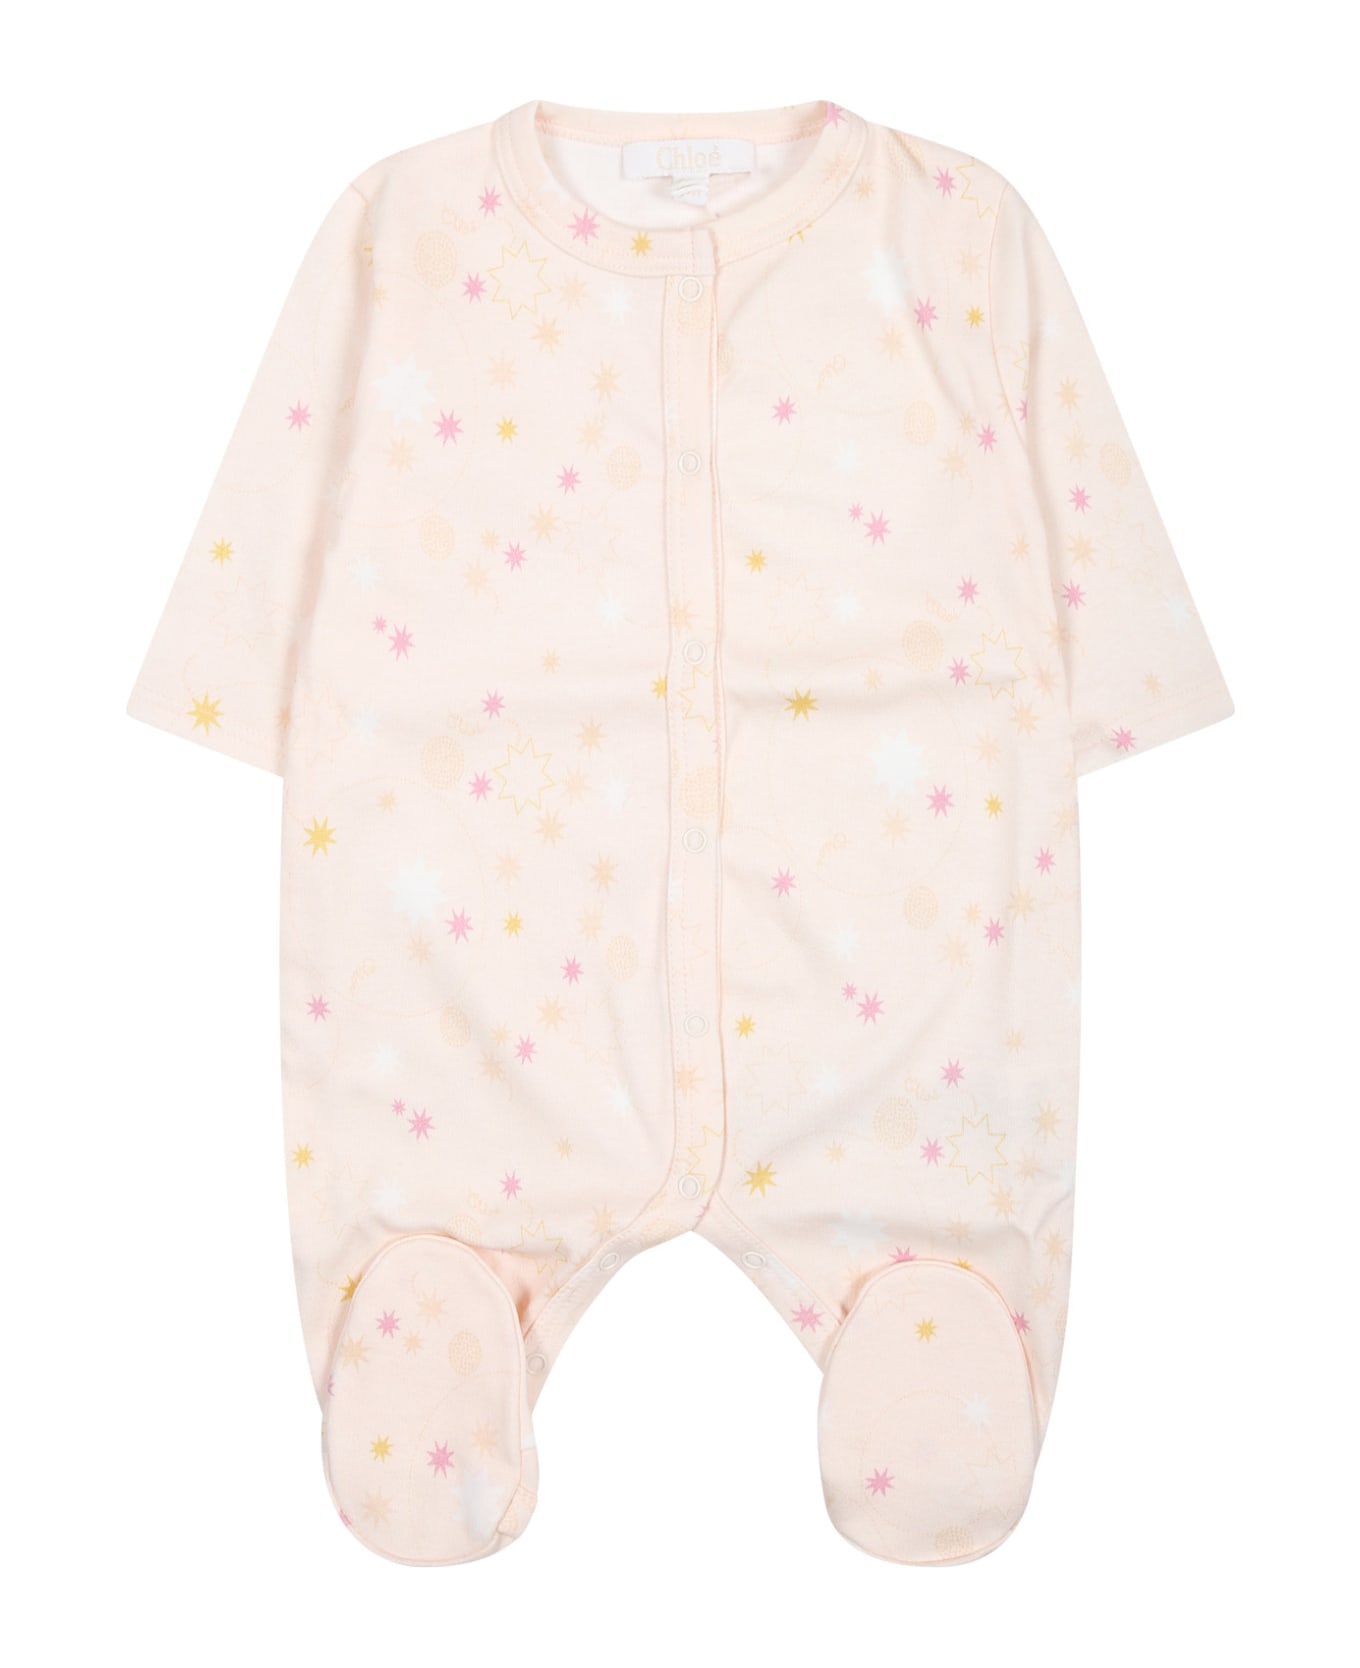 Chloé Multicolored Set For Baby Girl - Multicolor